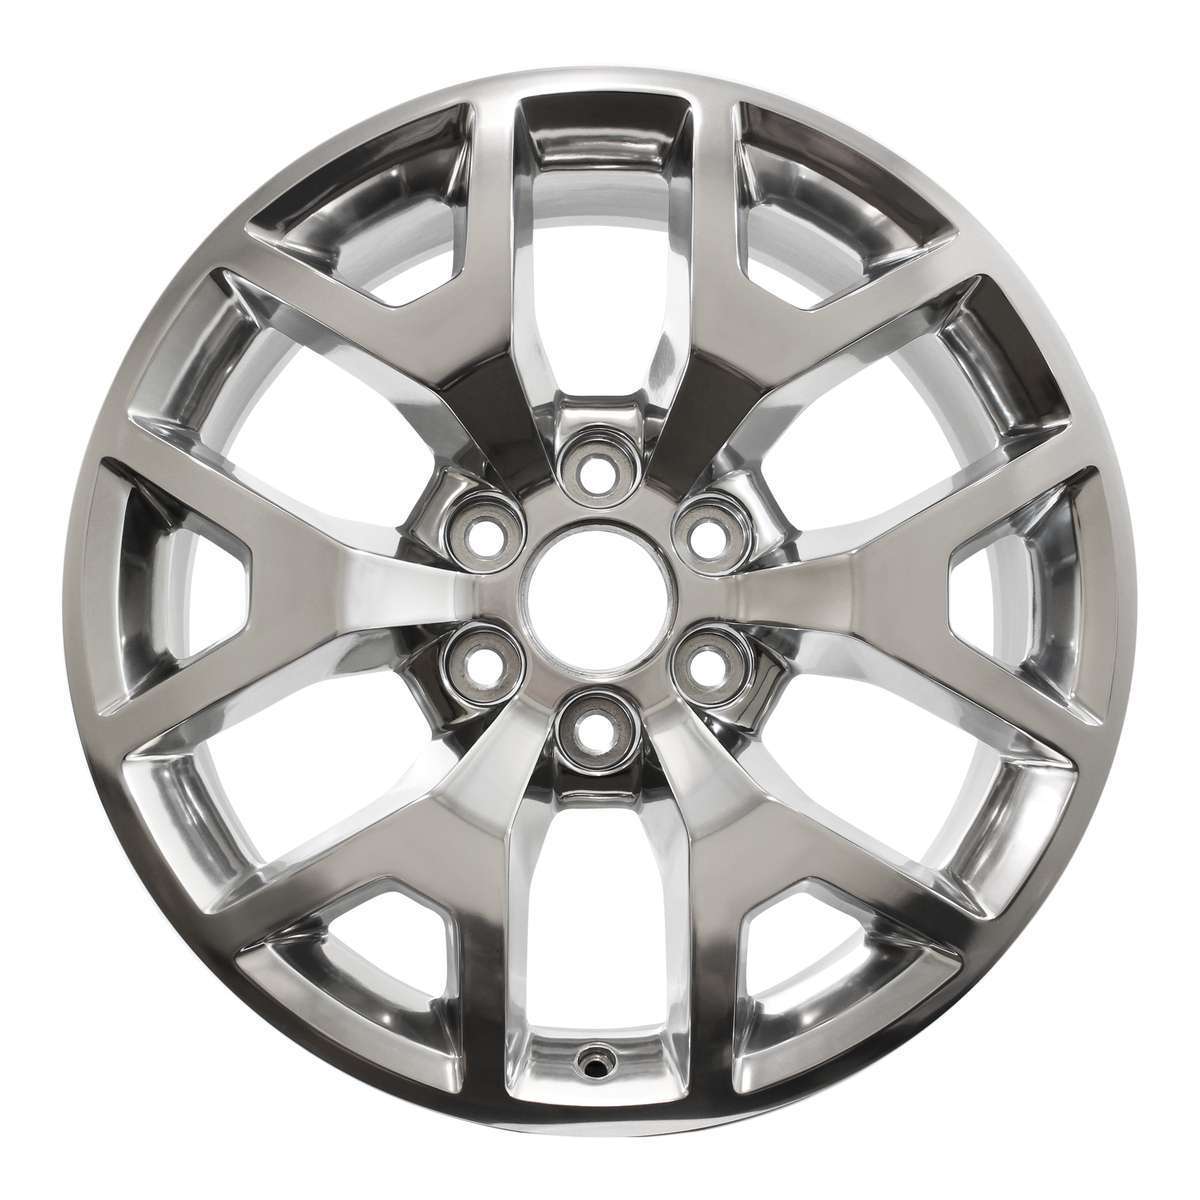 2021 GMC Yukon XL New 20" Replacement Wheel Rim RW5698P